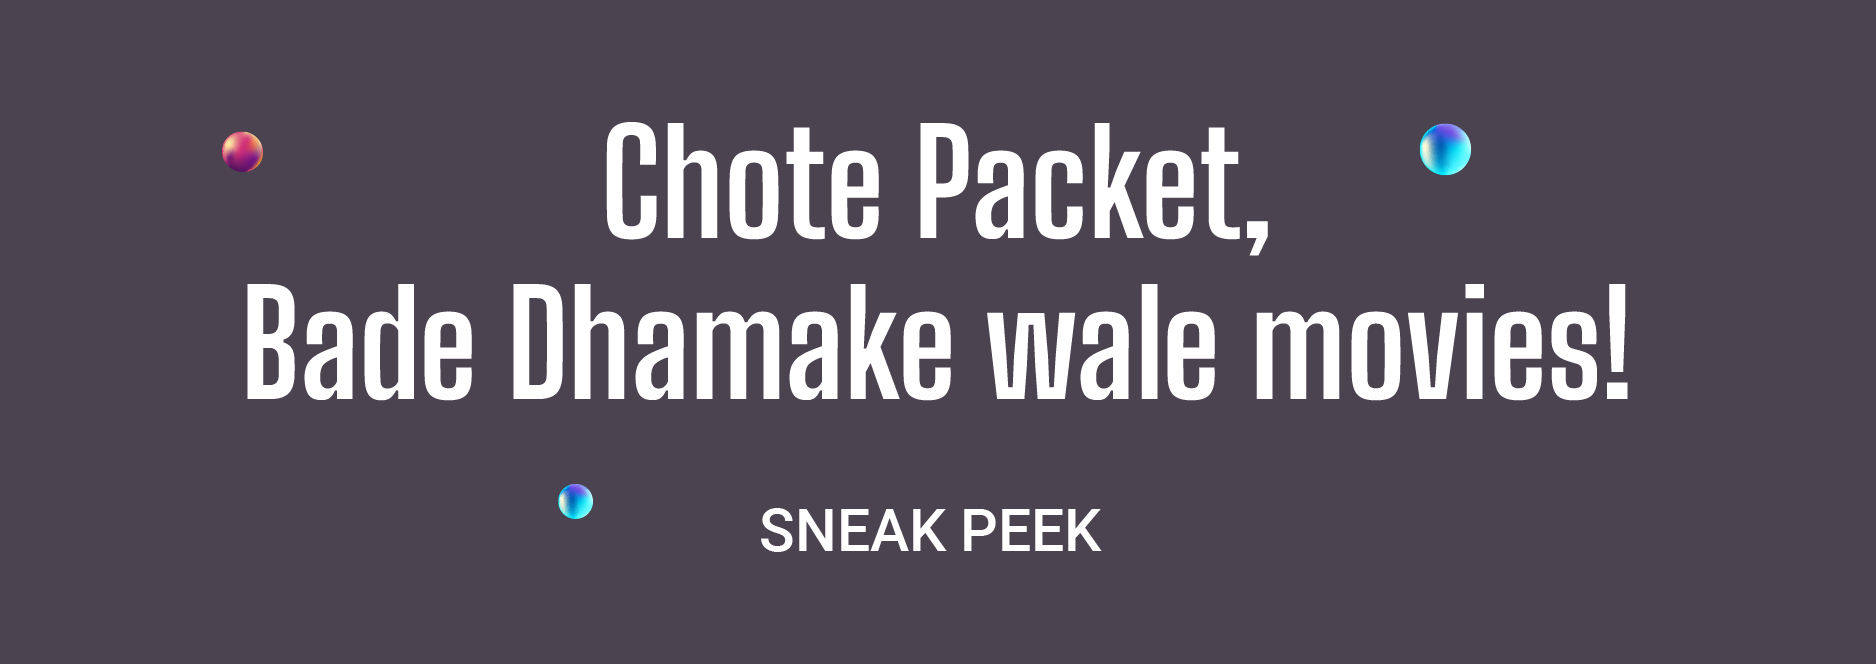 Chota packet, bade dhamaka wale movies